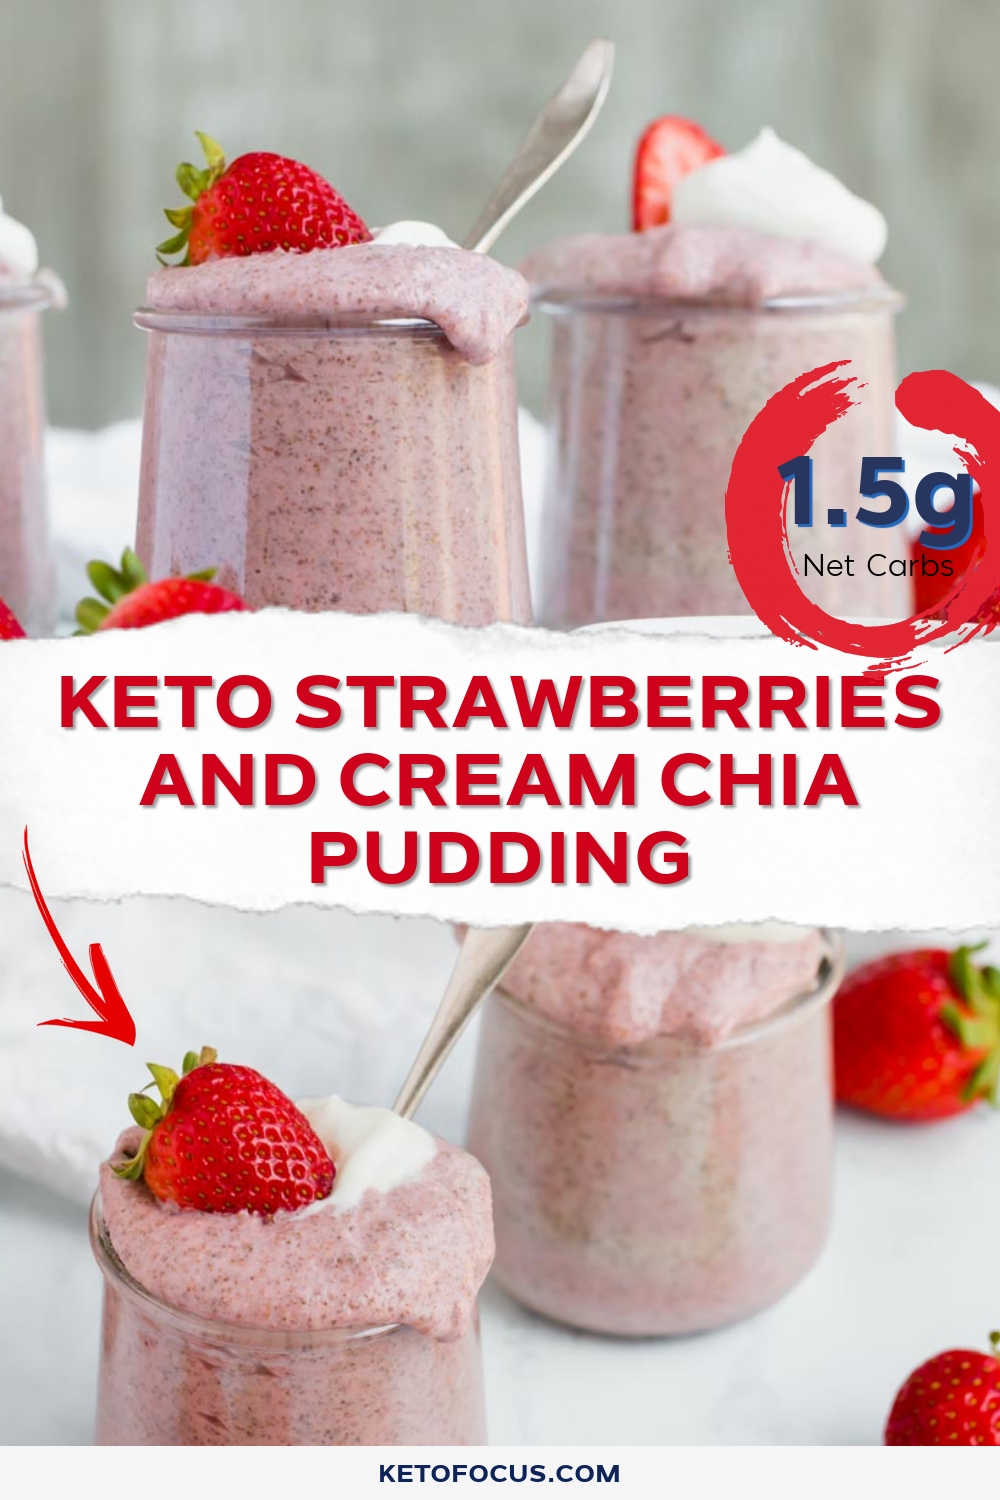 Keto Strawberries and Cream Chia Pudding